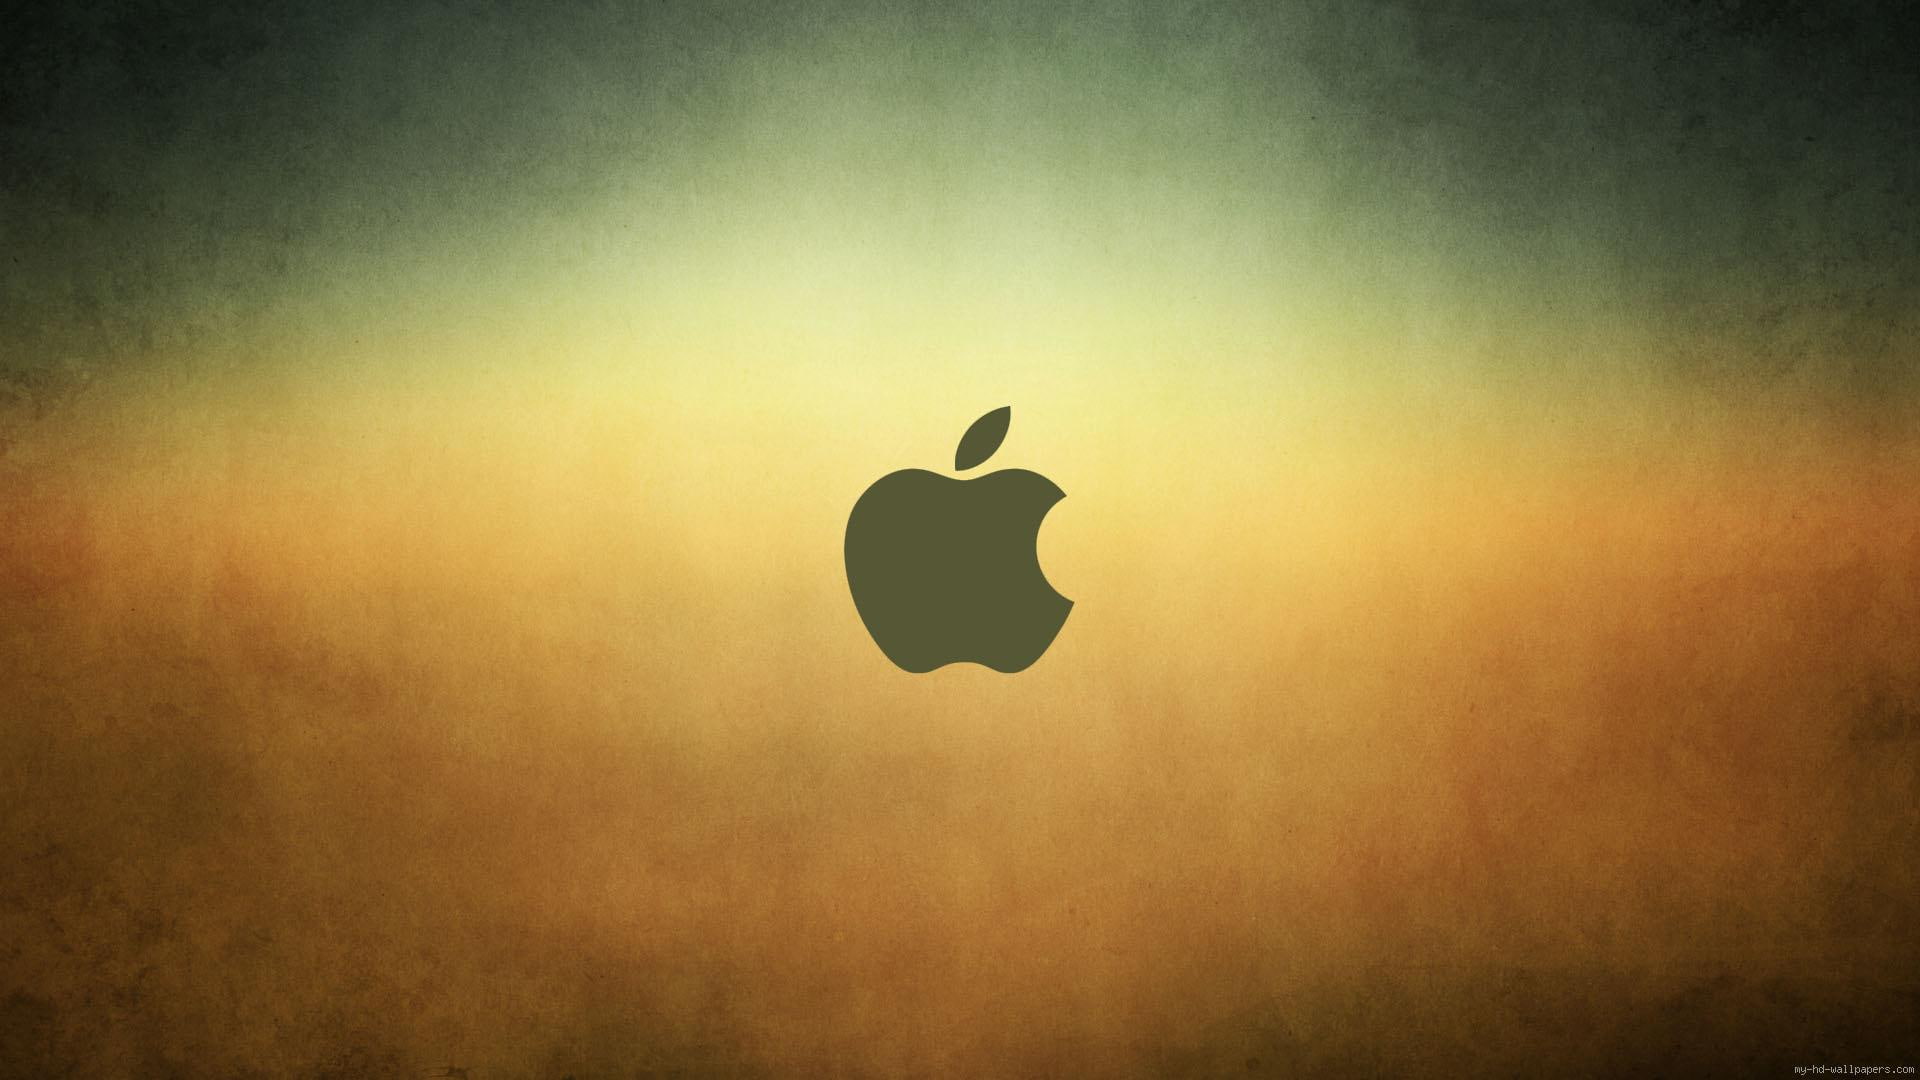 Apple logo on gradient background, apple logo, brand